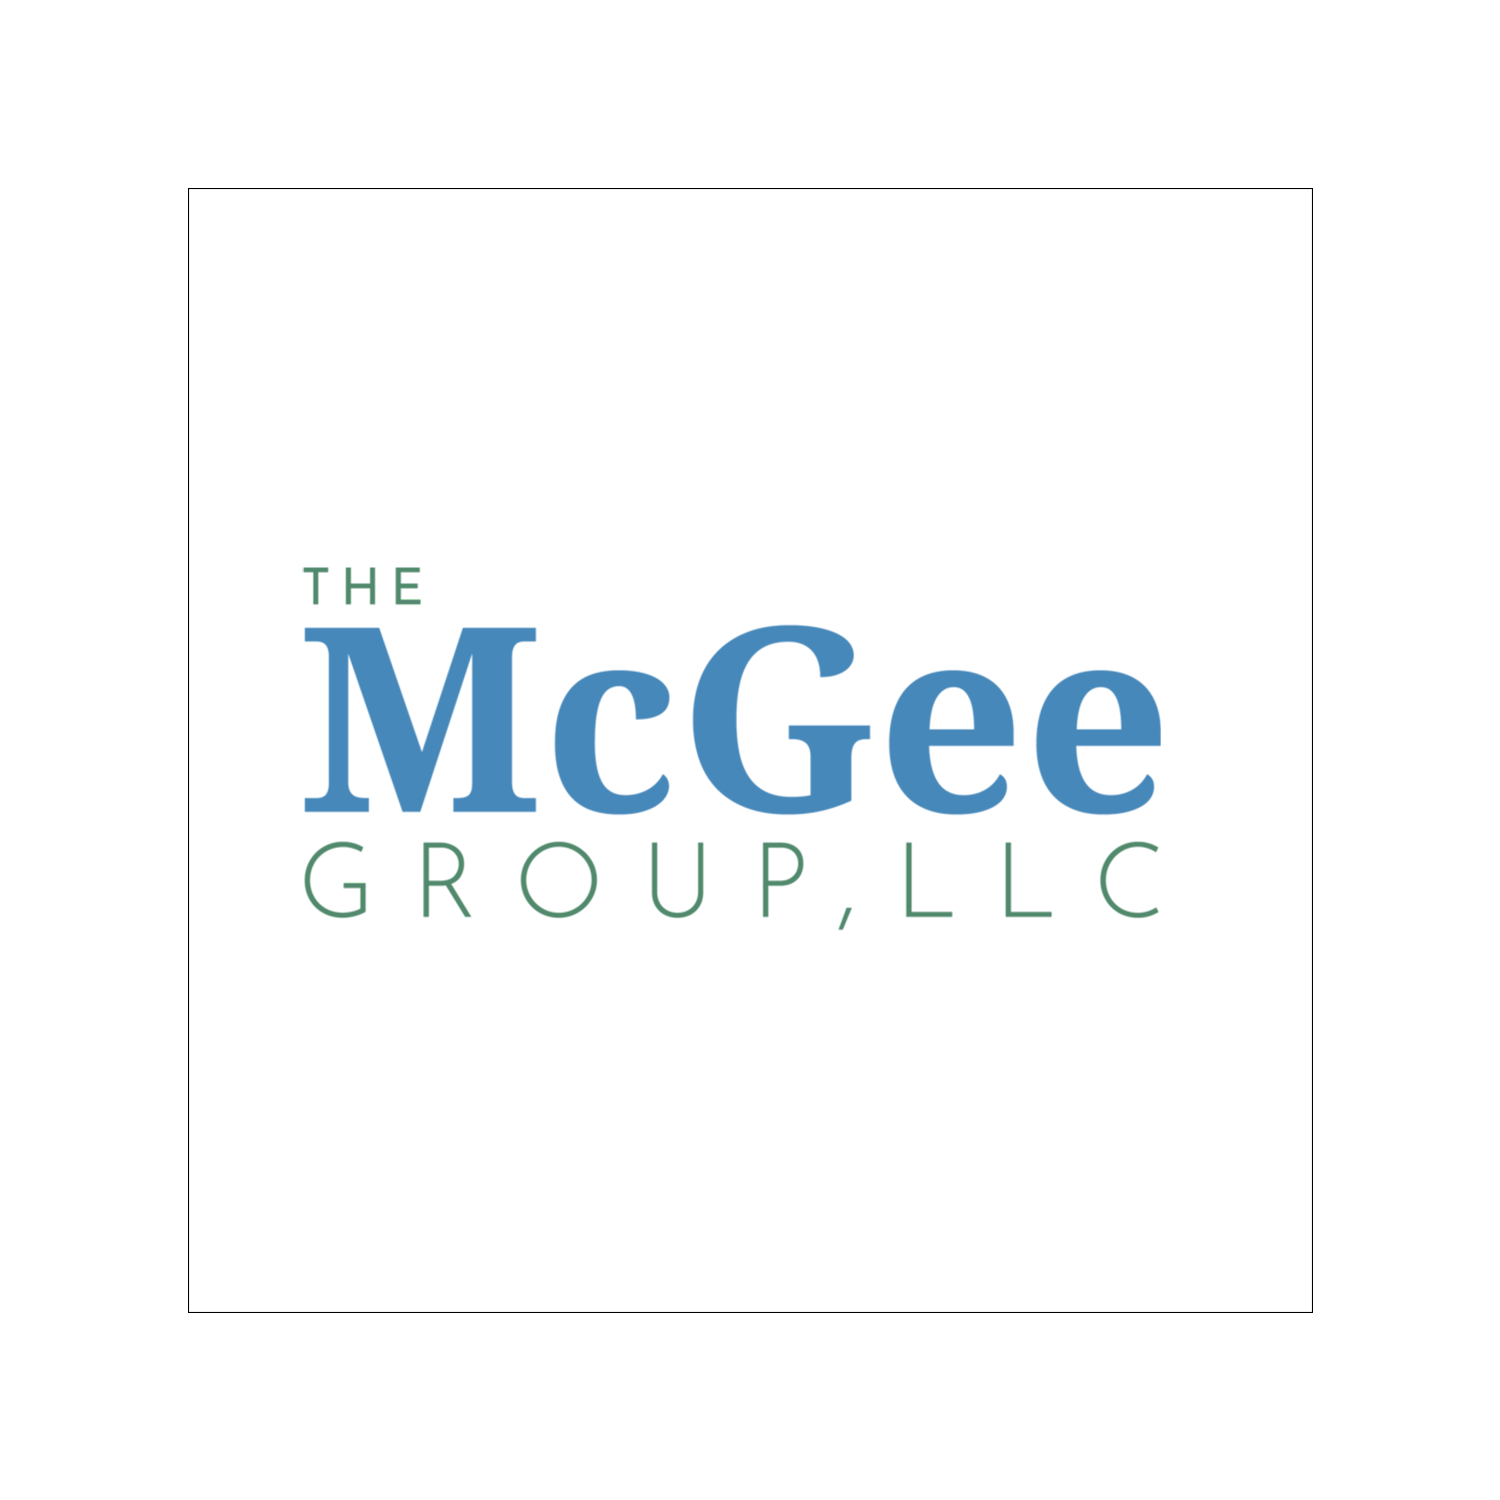 The McGee Group, LLC